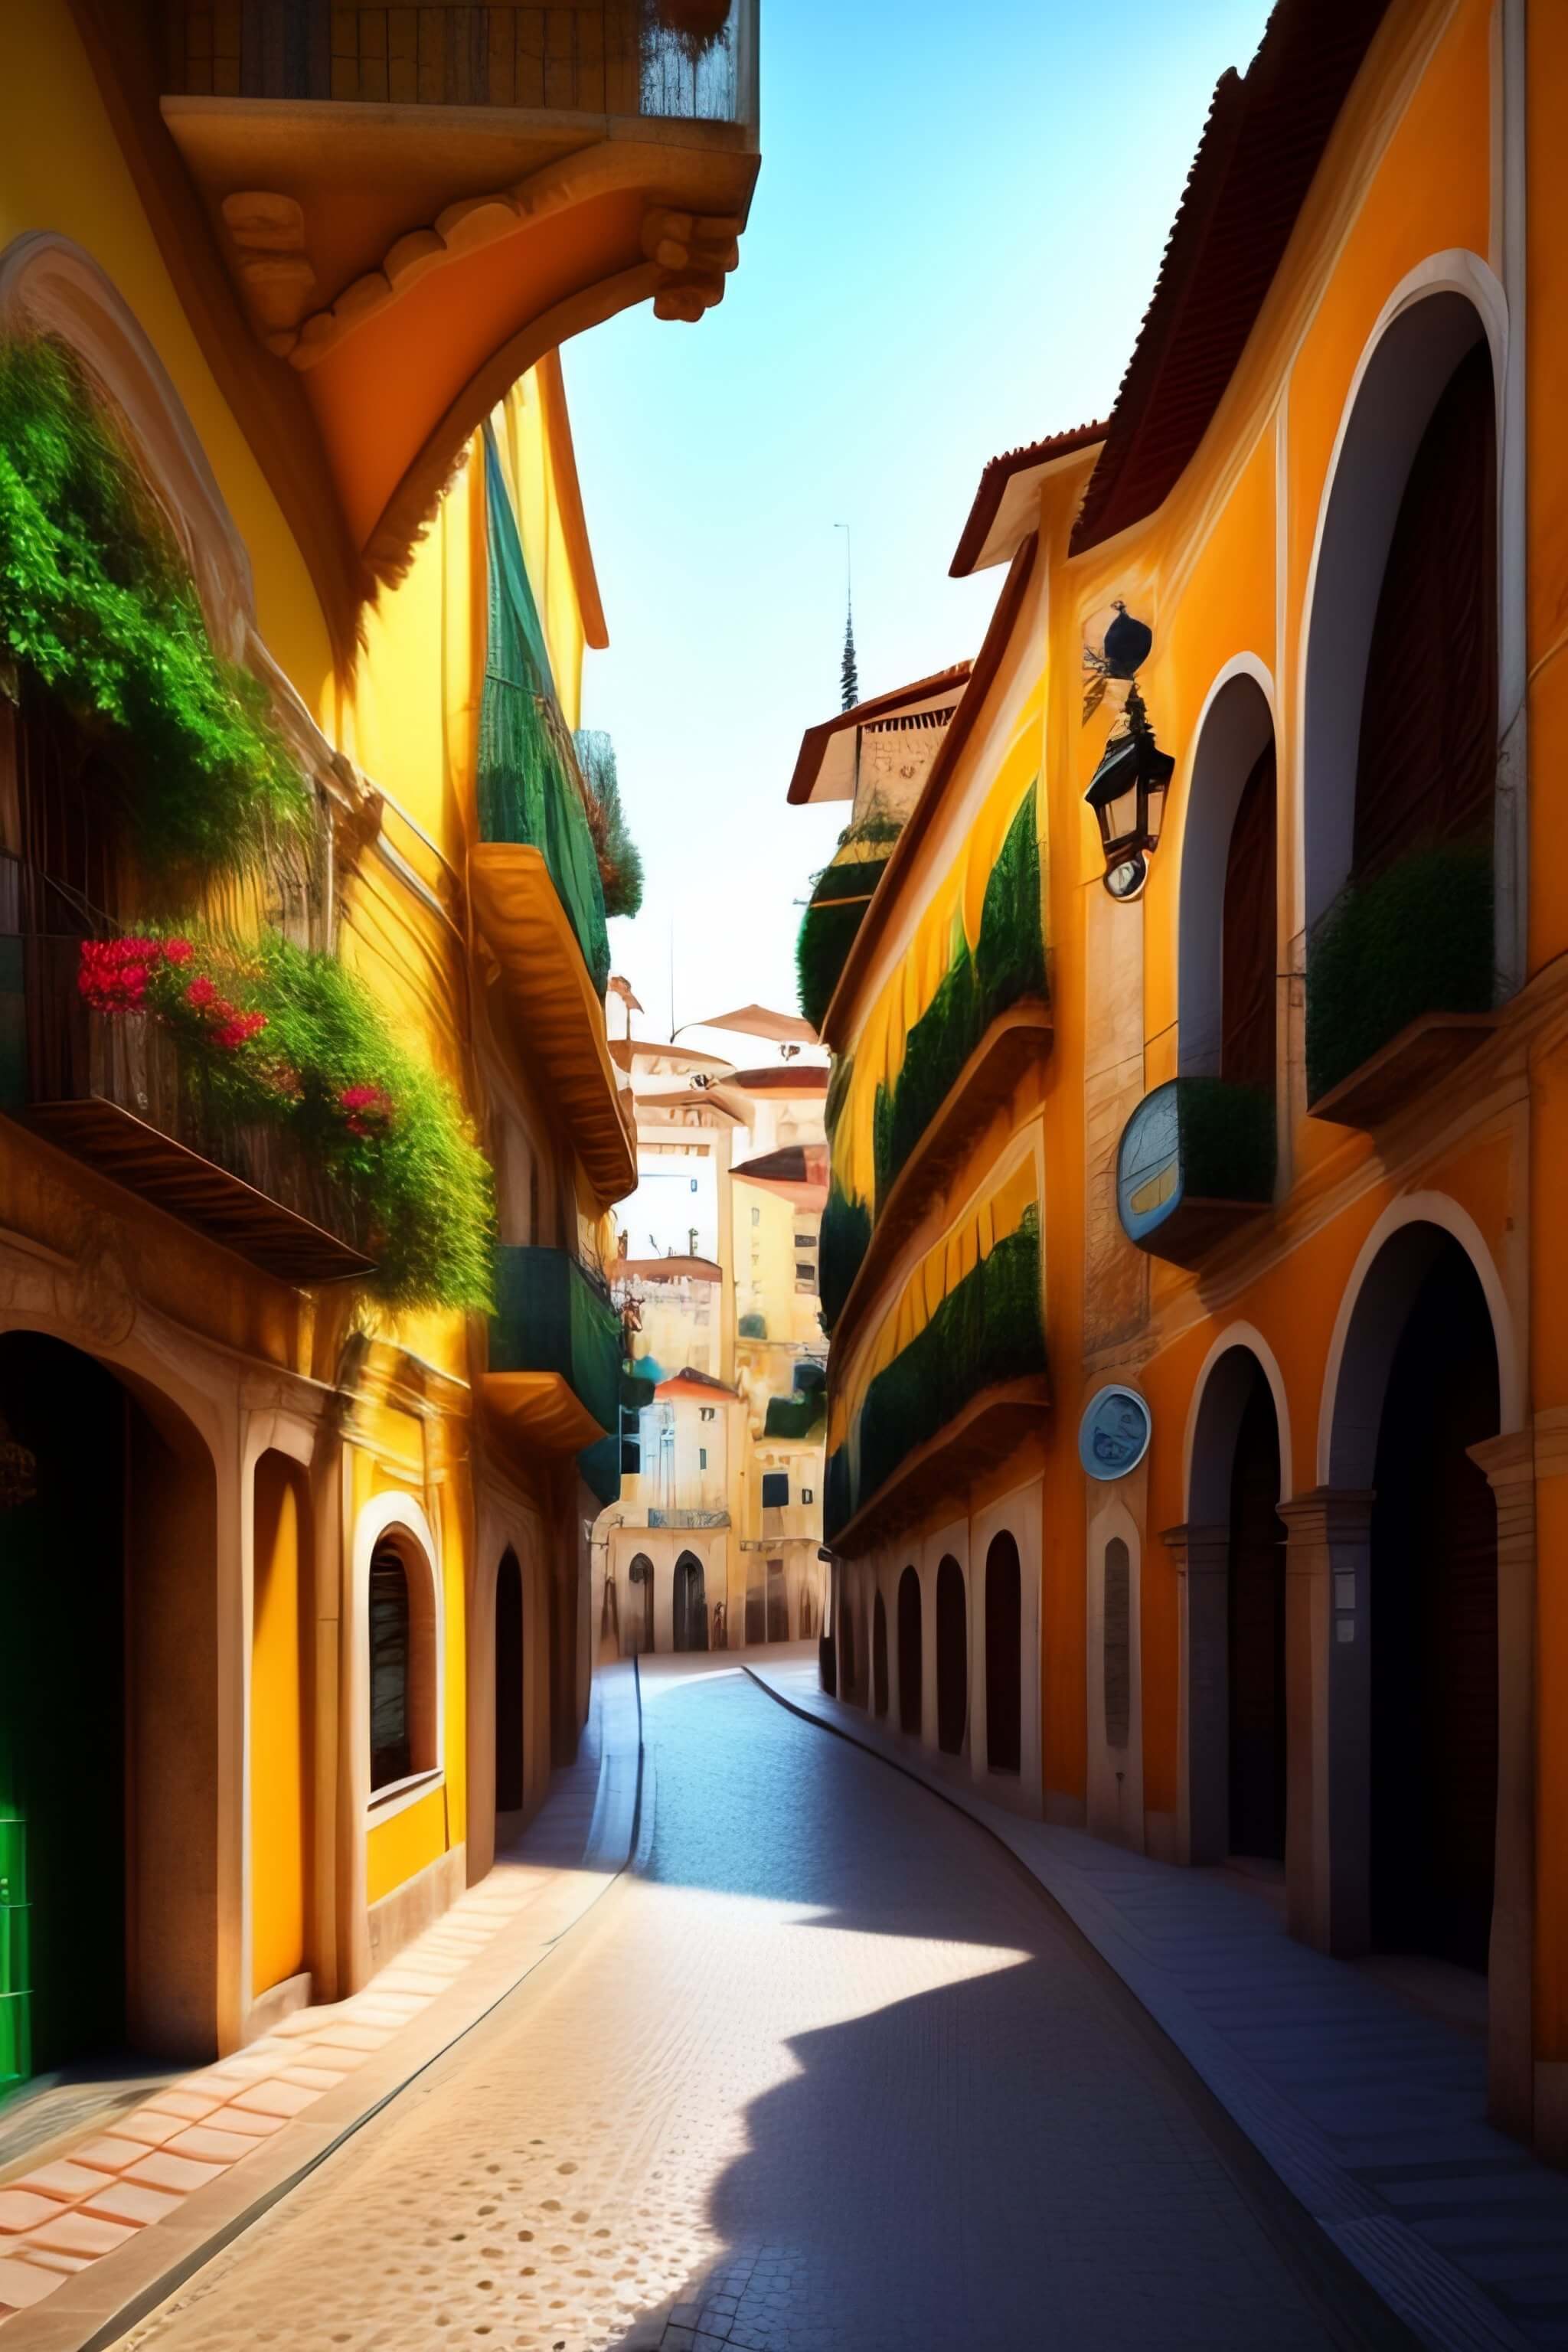 10. Venice 🛶: A Fairytale on Italy's Canals